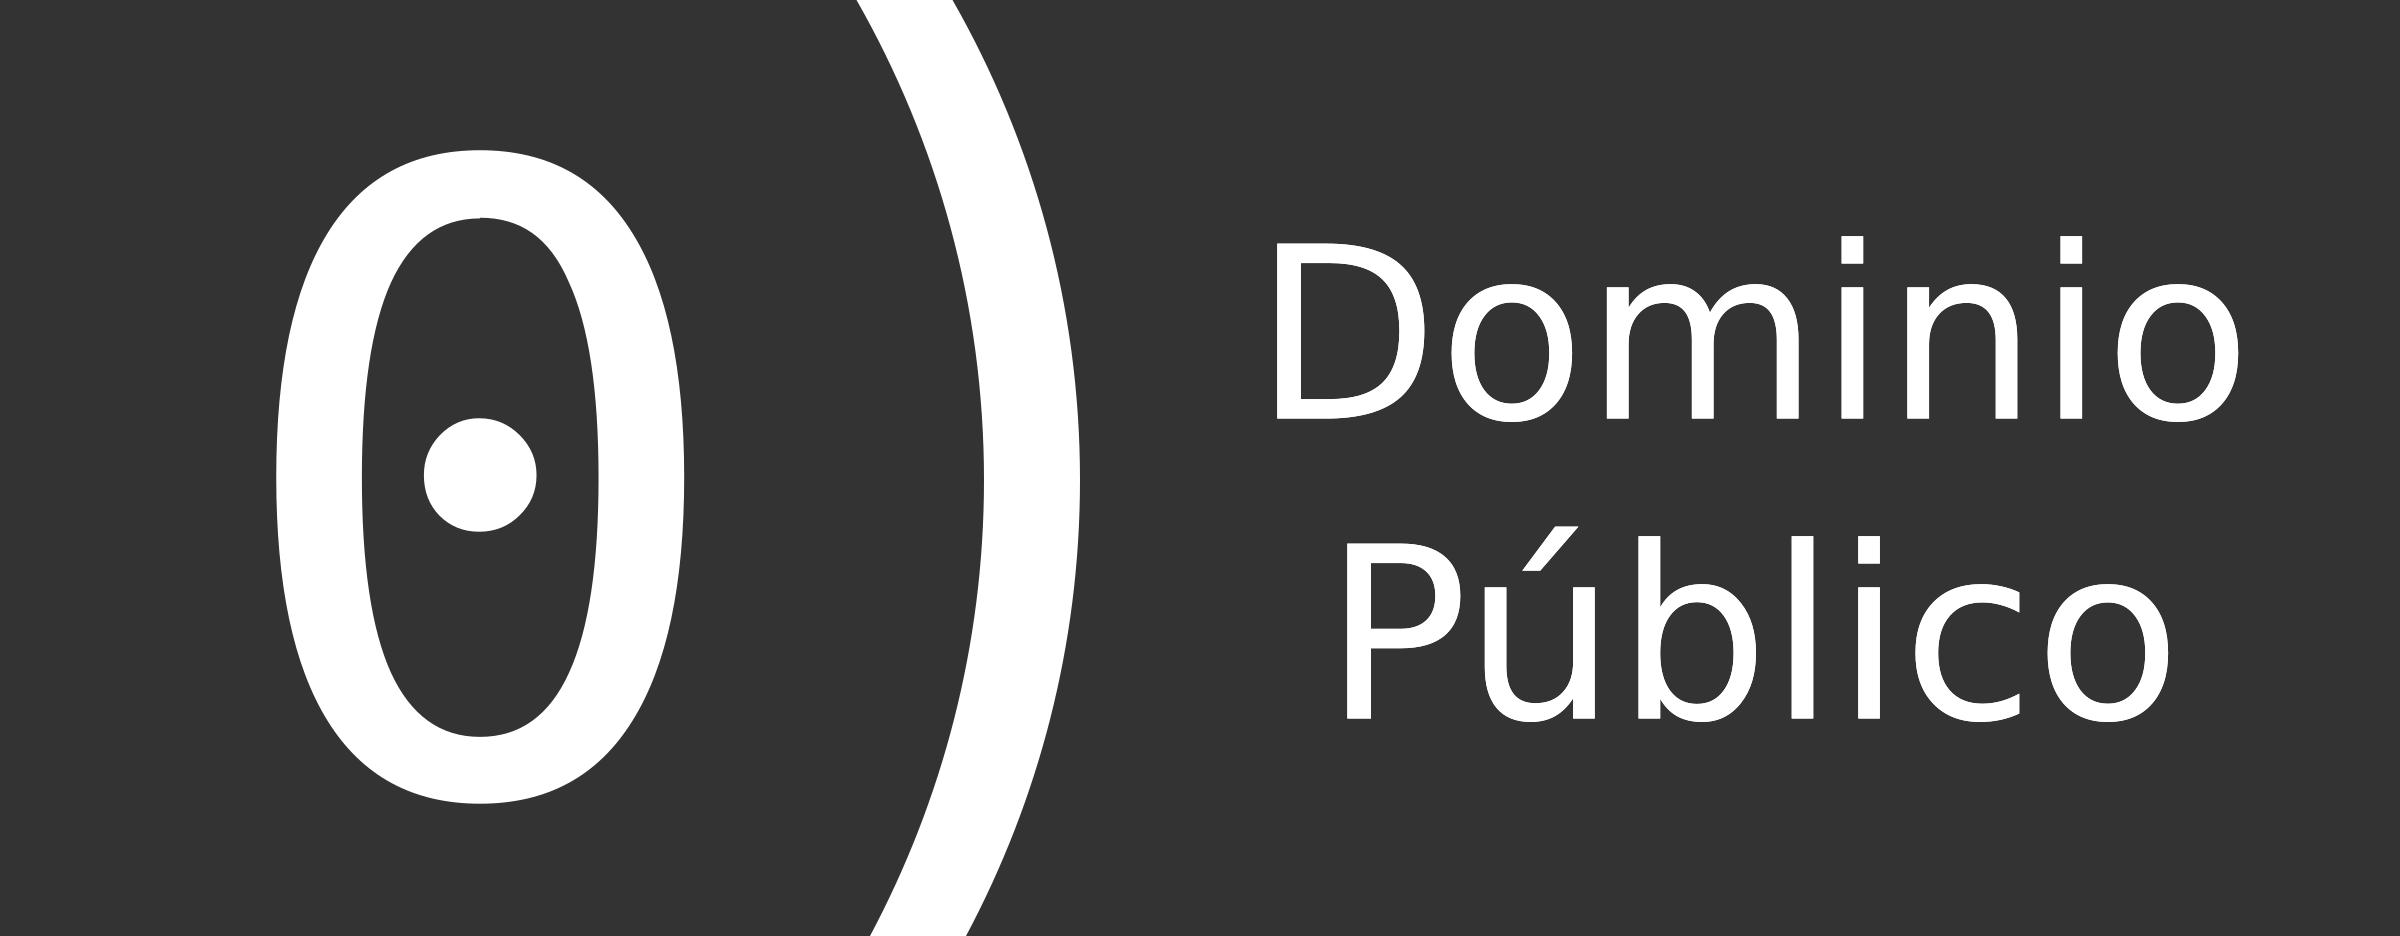 Public Domain Tag png